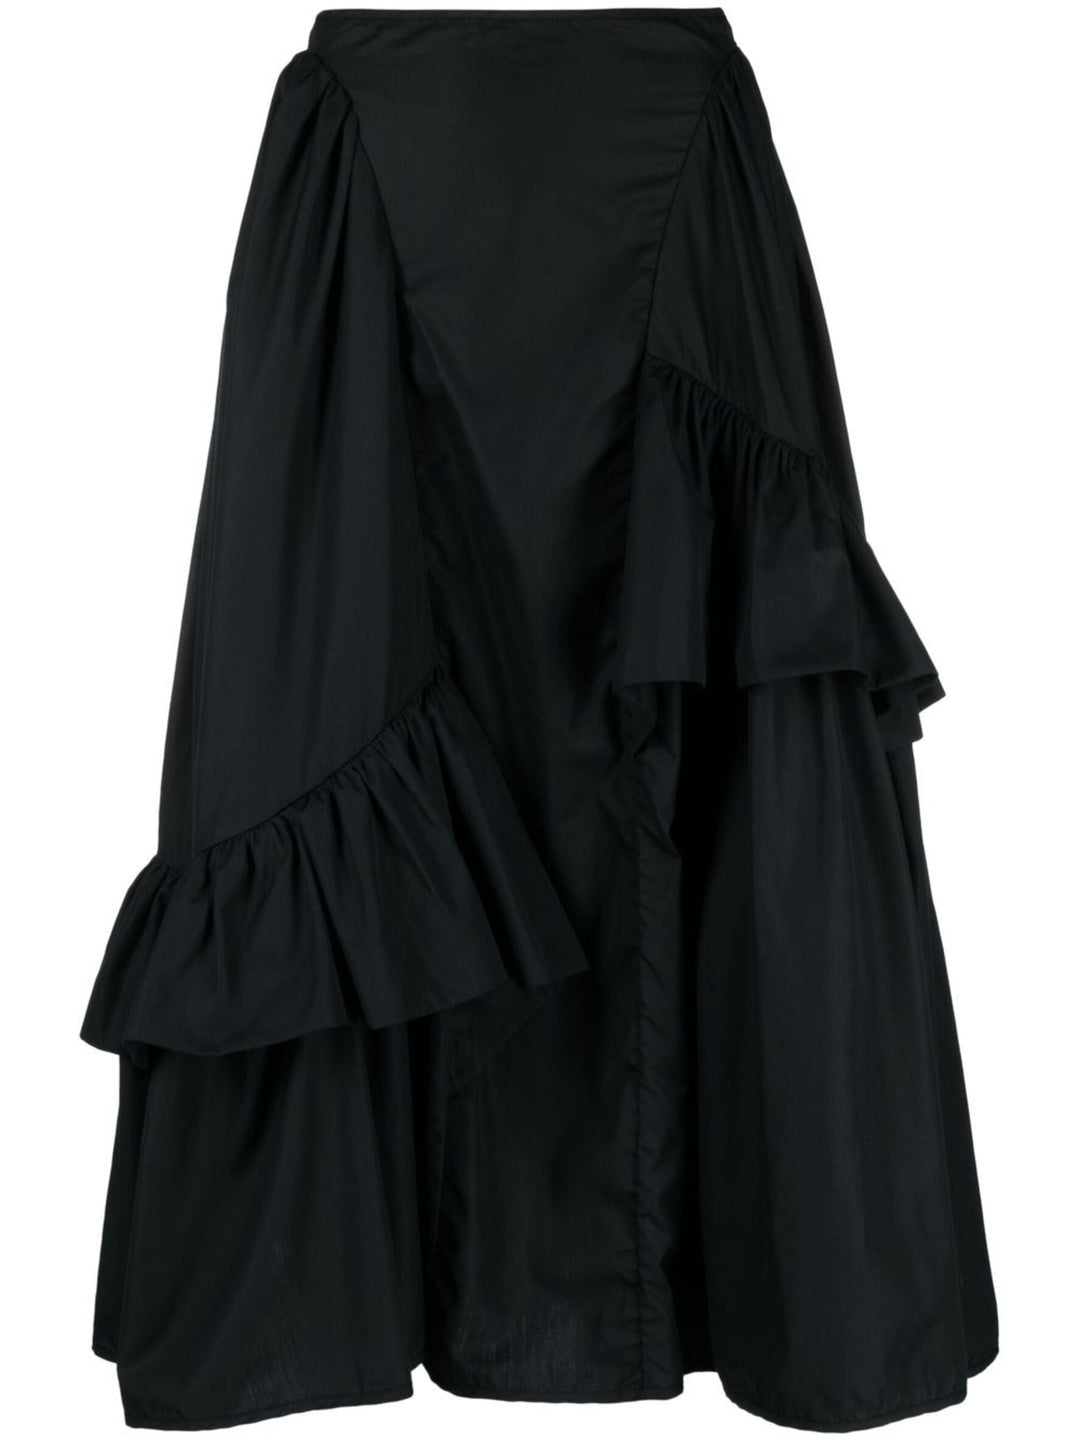 Damara Skirt